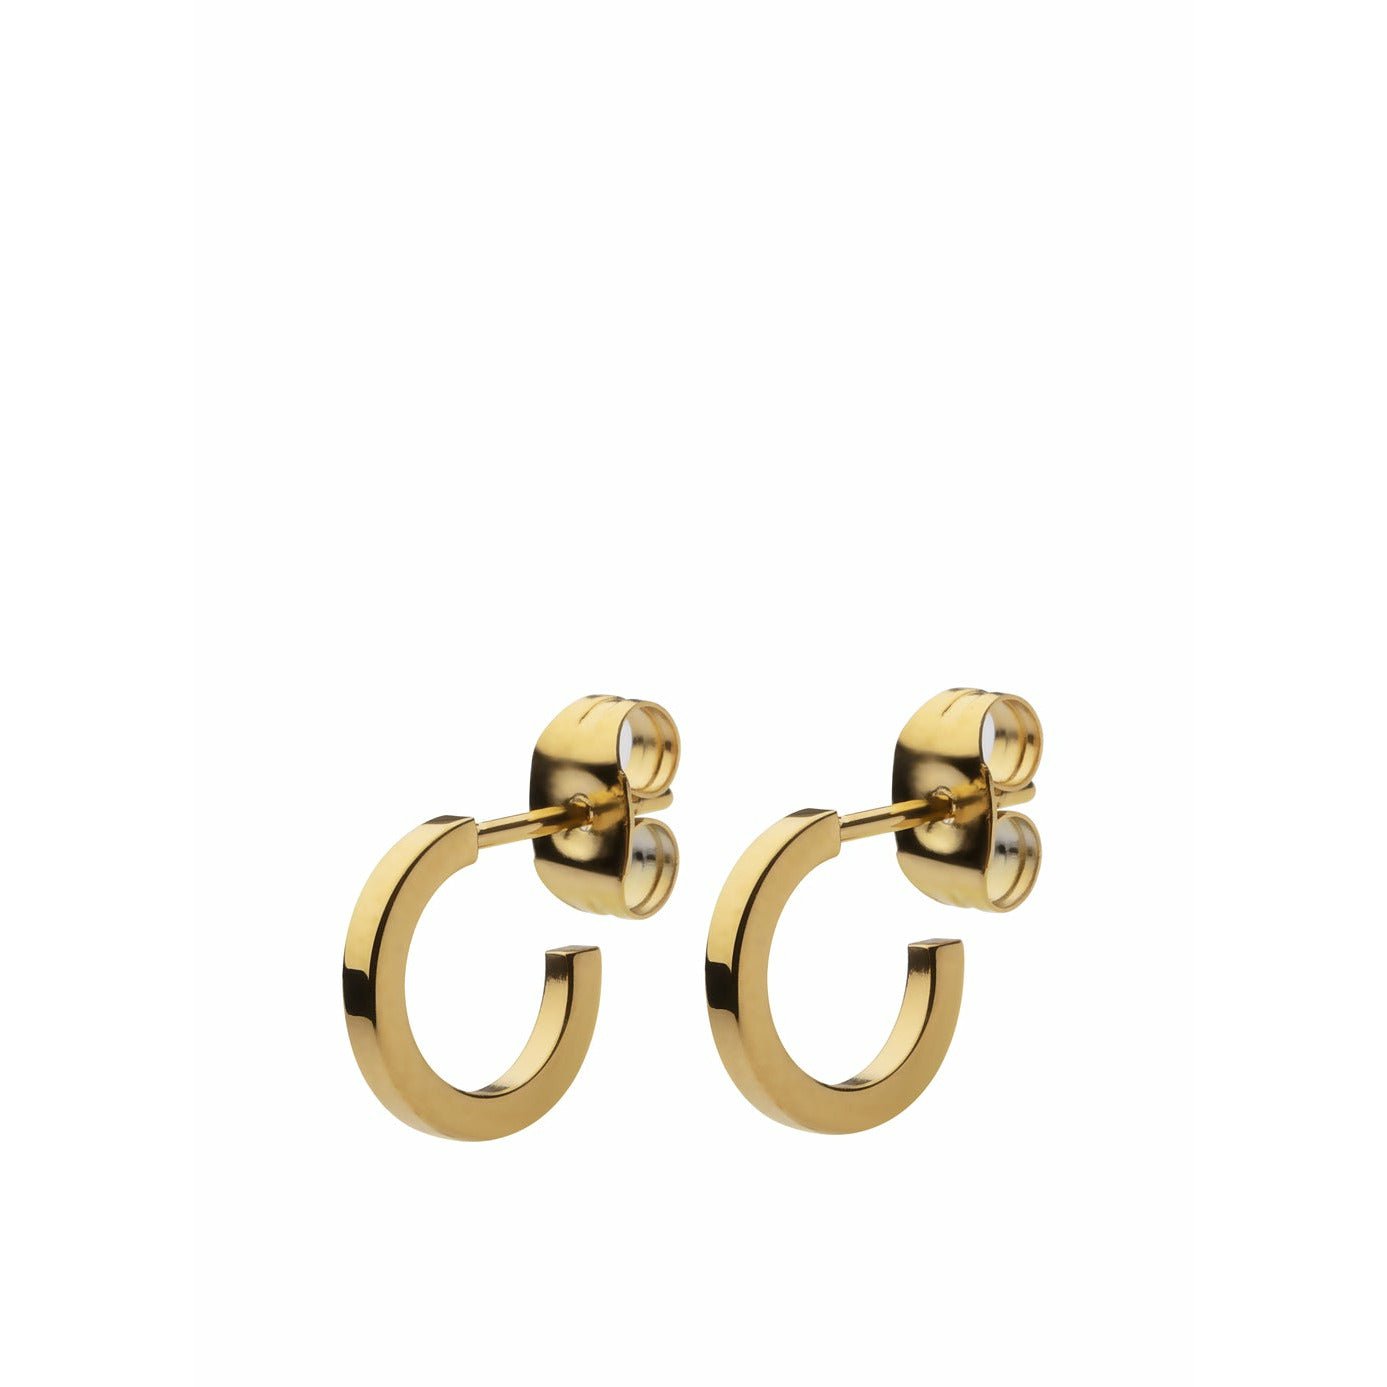 Skultuna Sb Earrings 316 L Steel Gold Plated, ø1,3 Cm